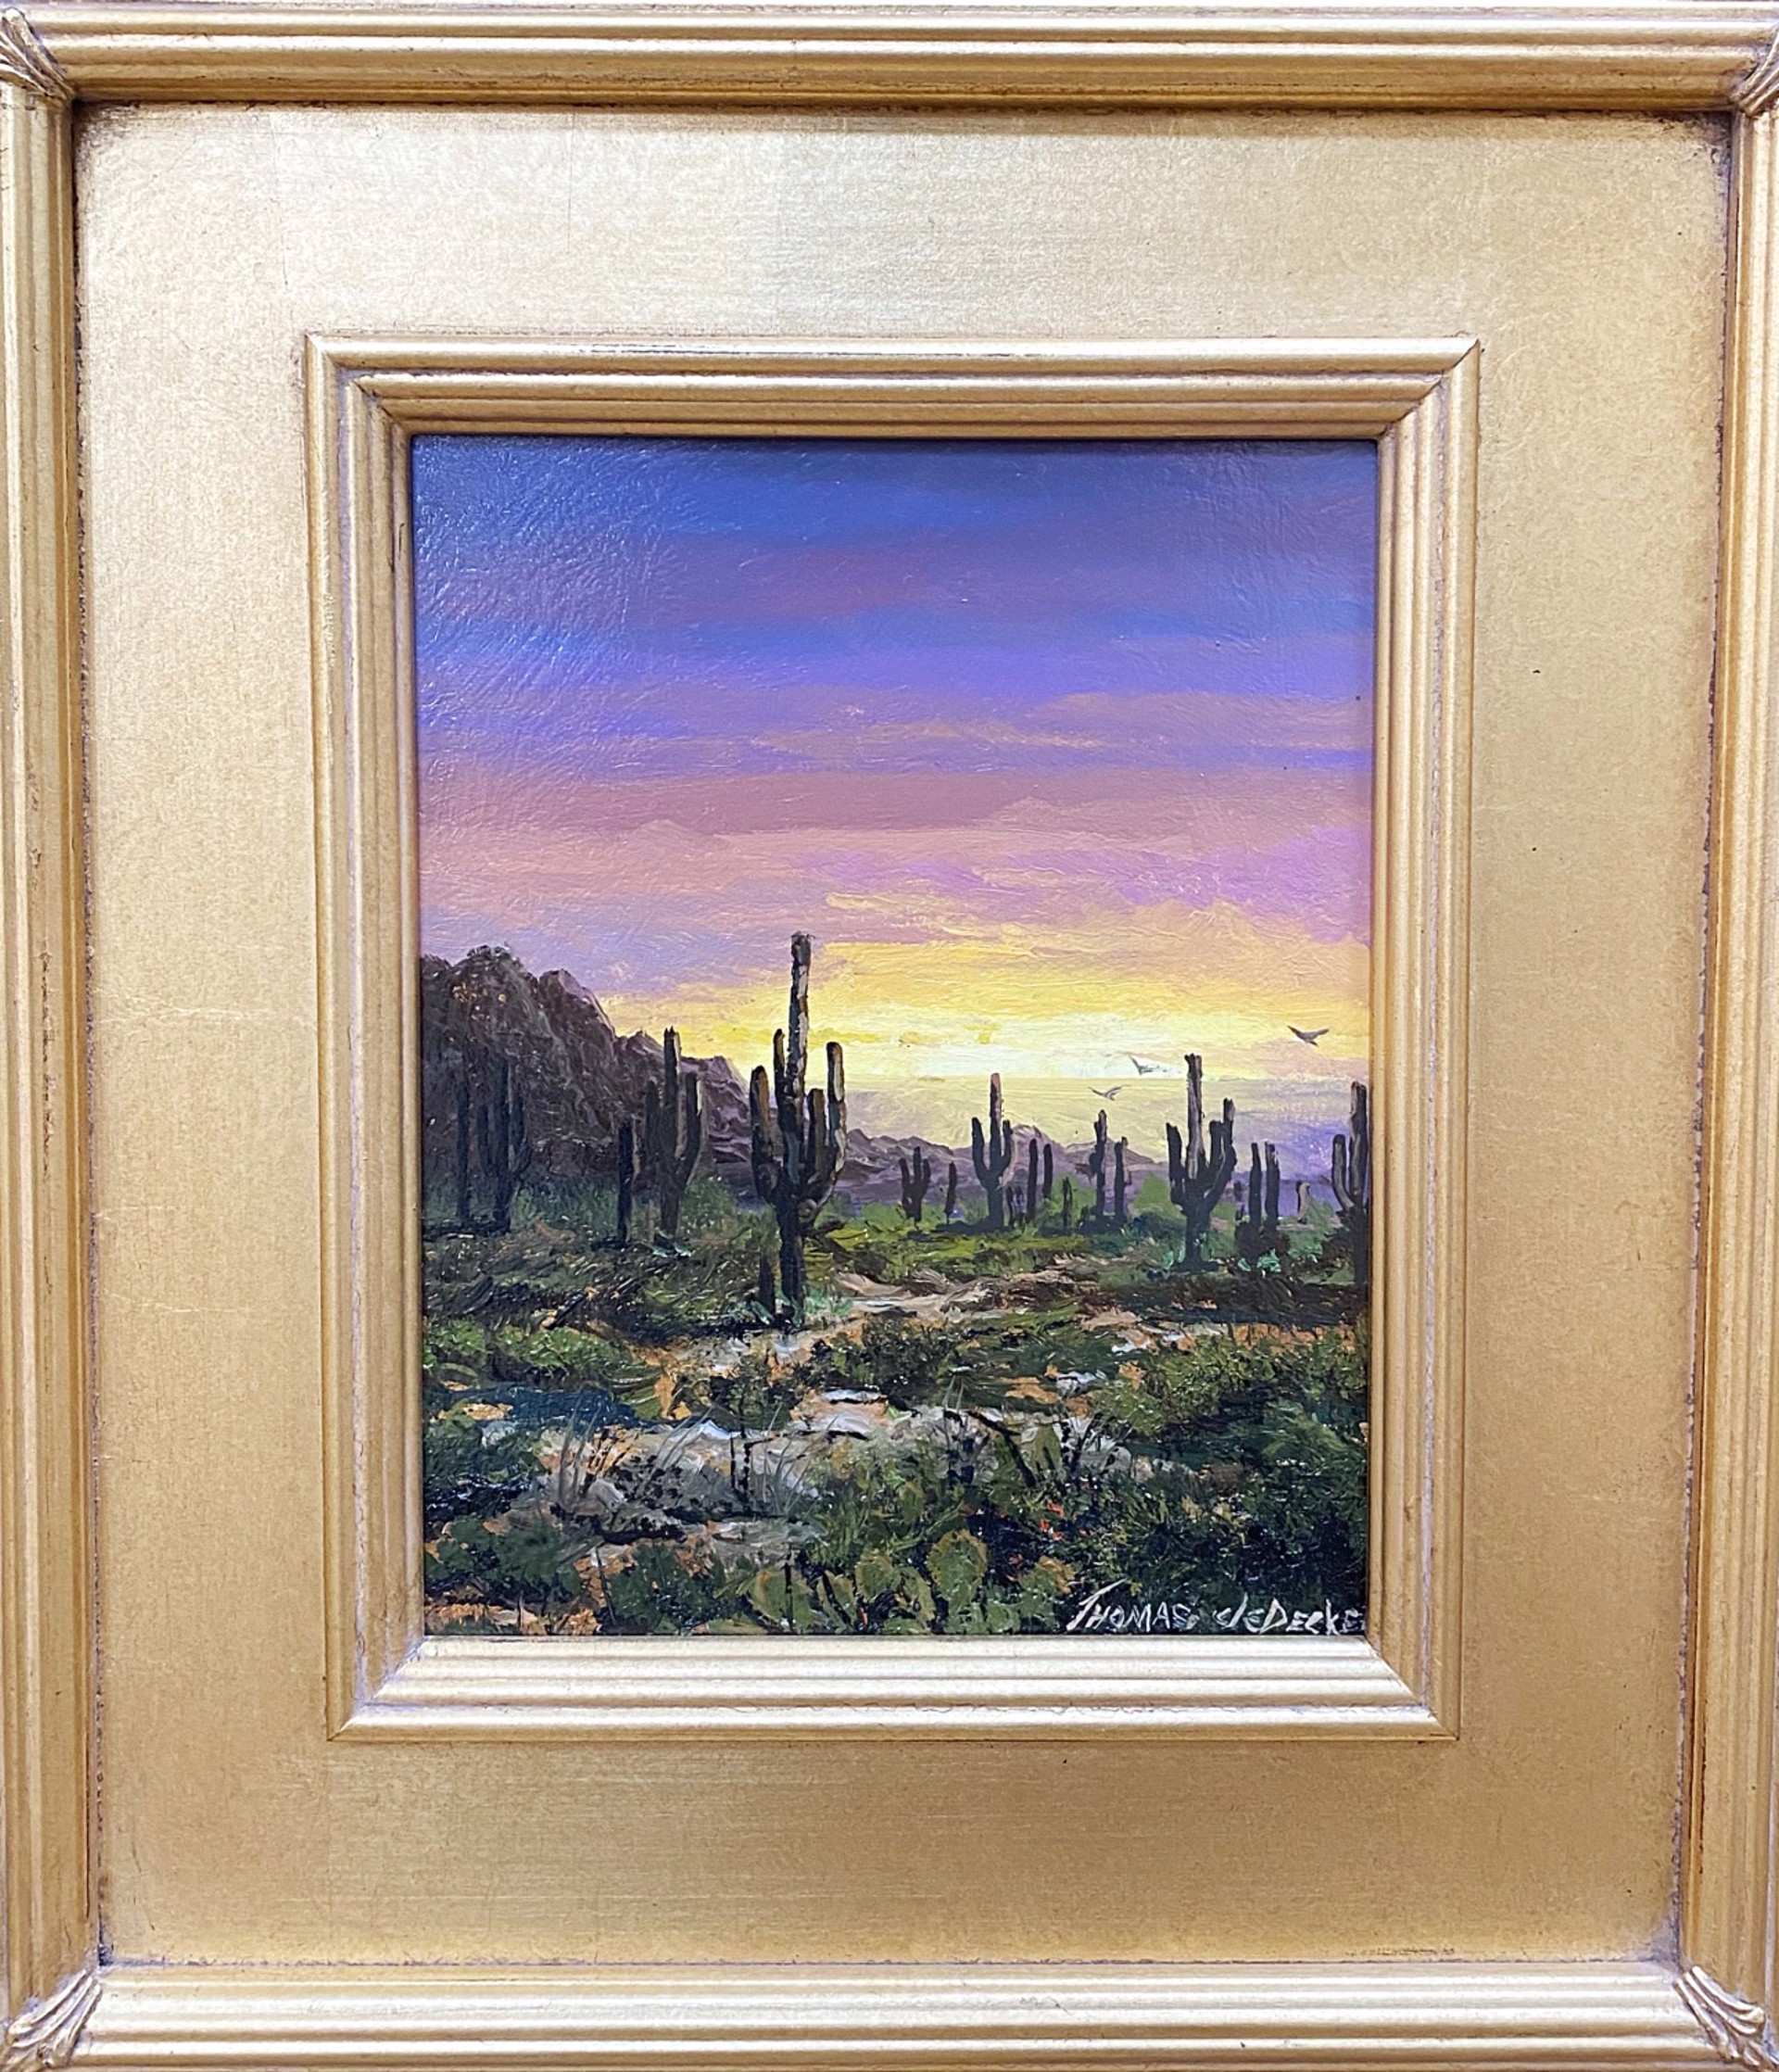 Arizona Sunset by Thomas deDecker